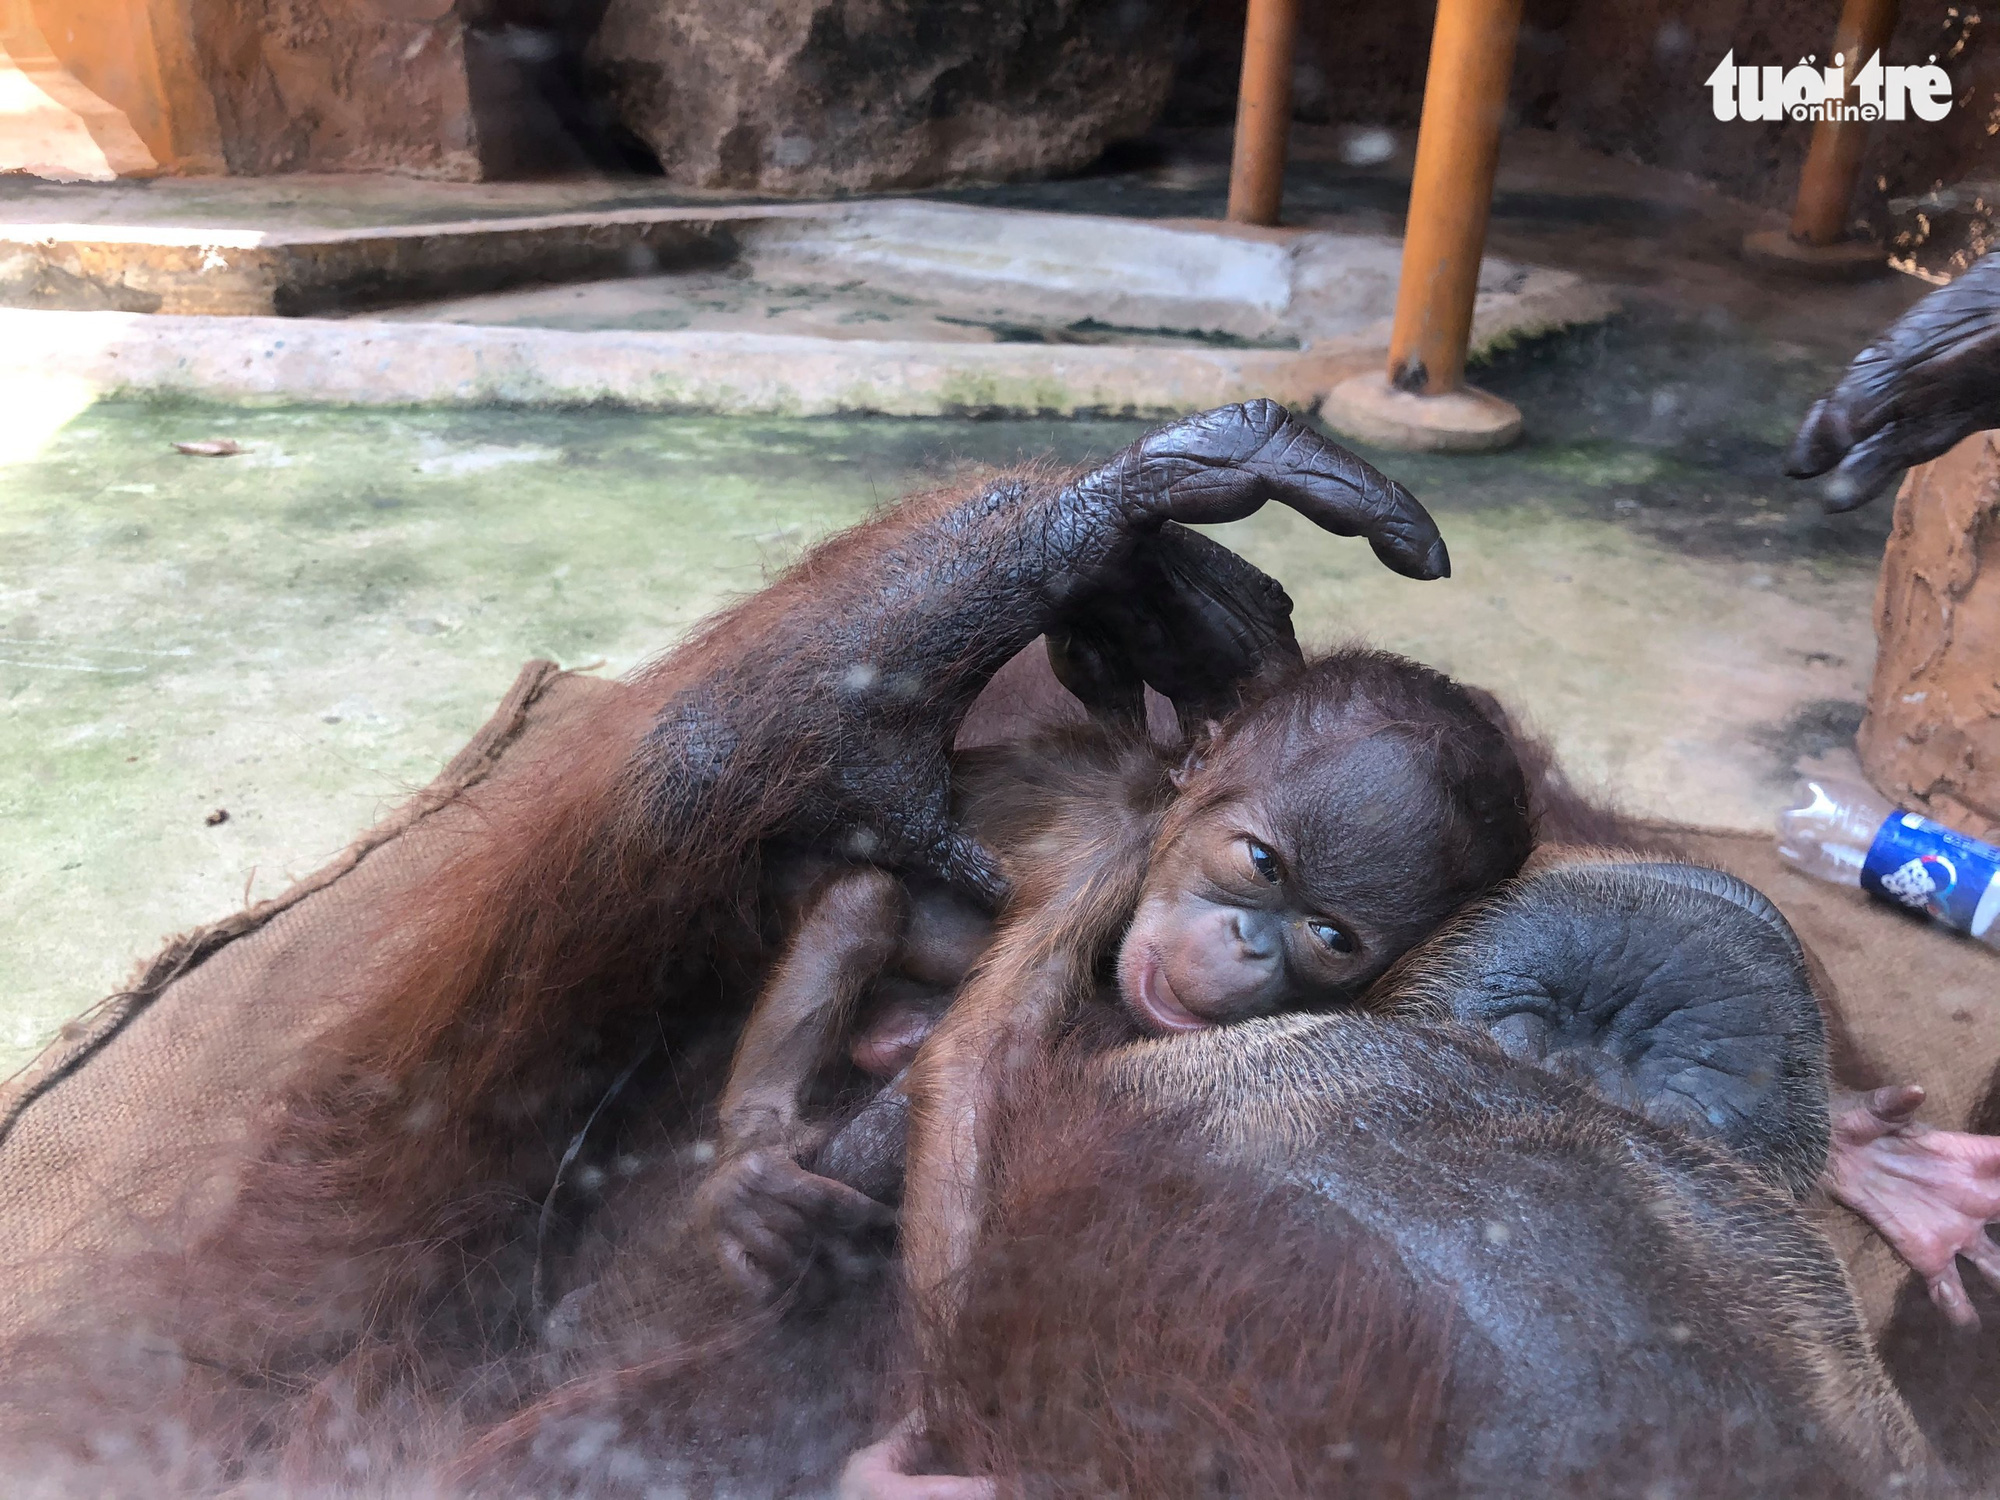 Endangered Sumatran orangutan gives birth at Saigon amusement park